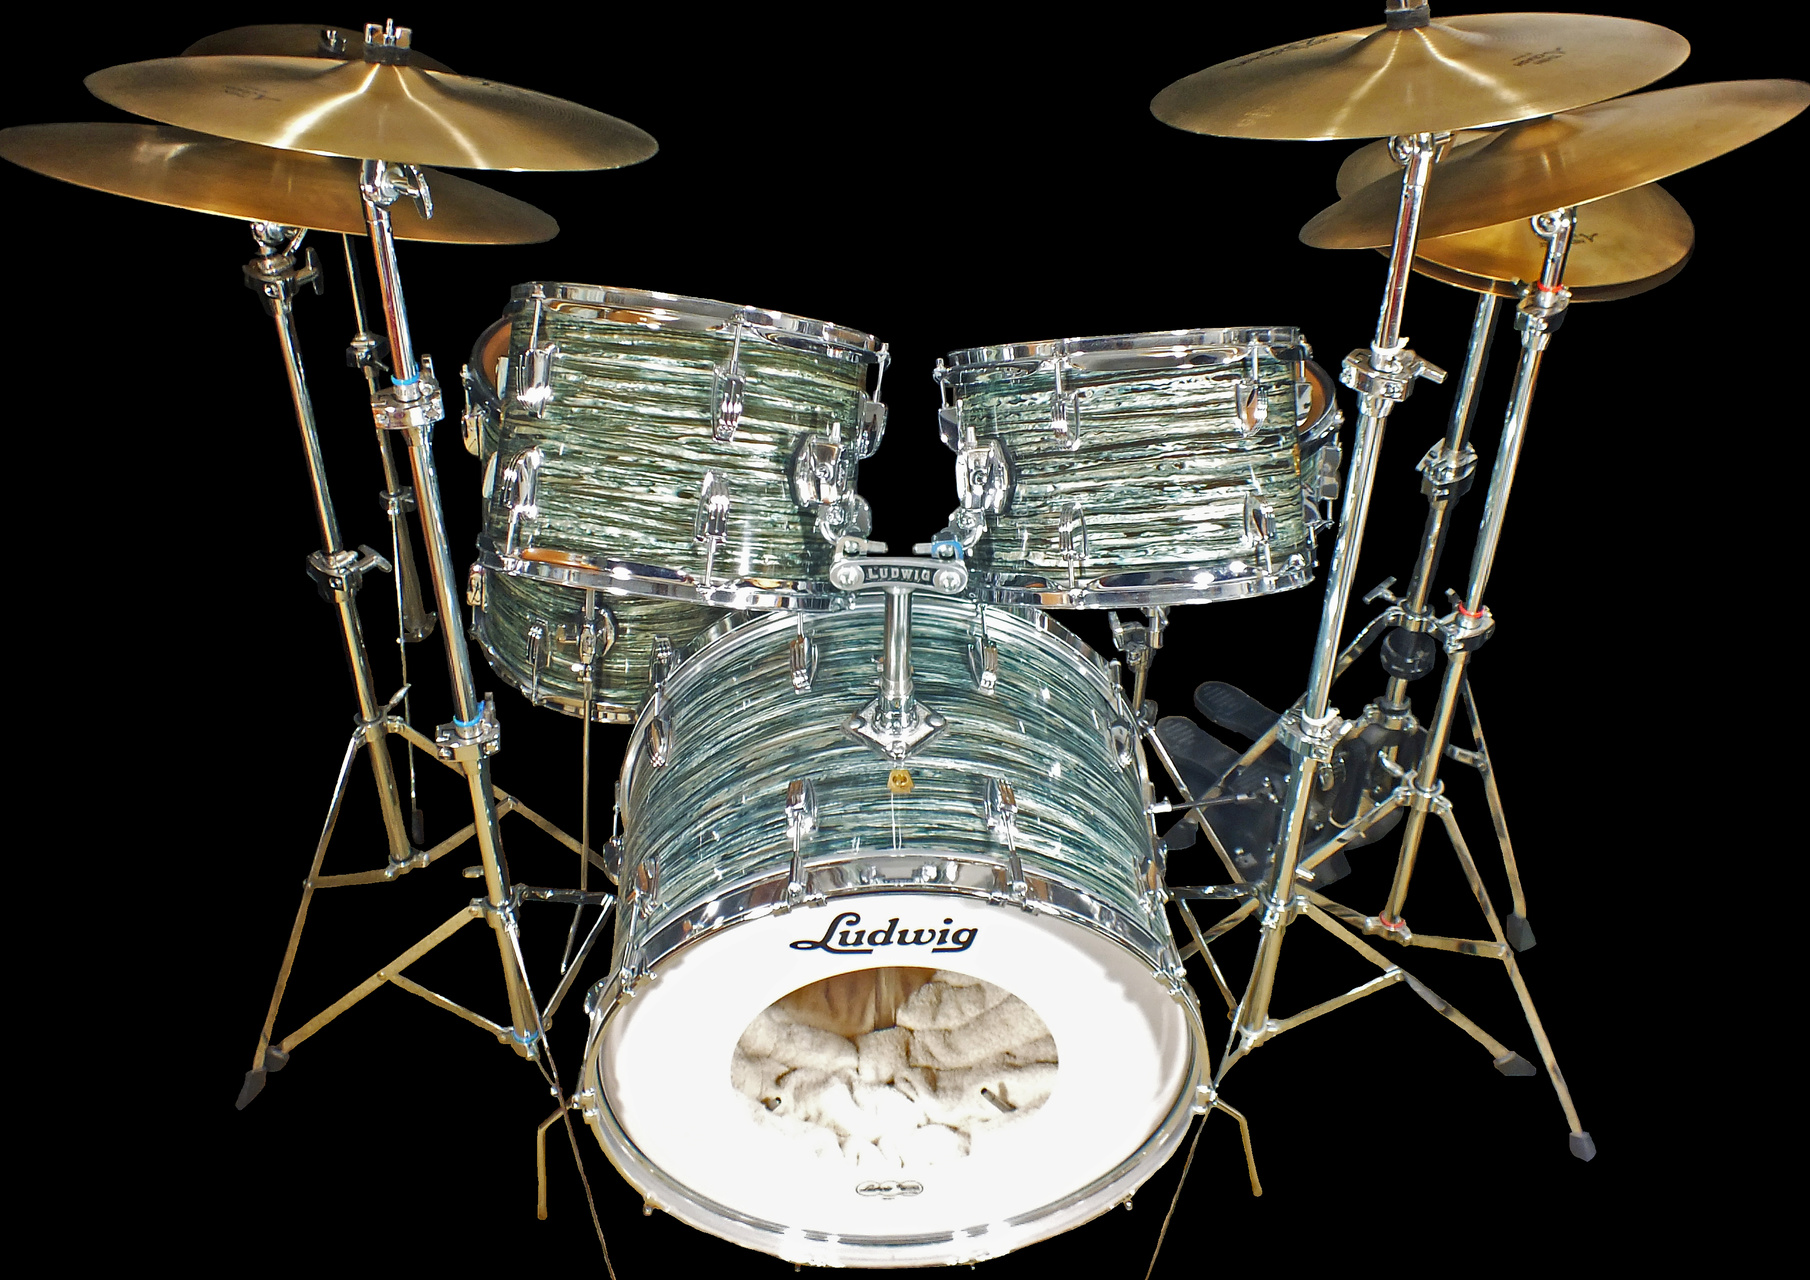 memphis drum kit